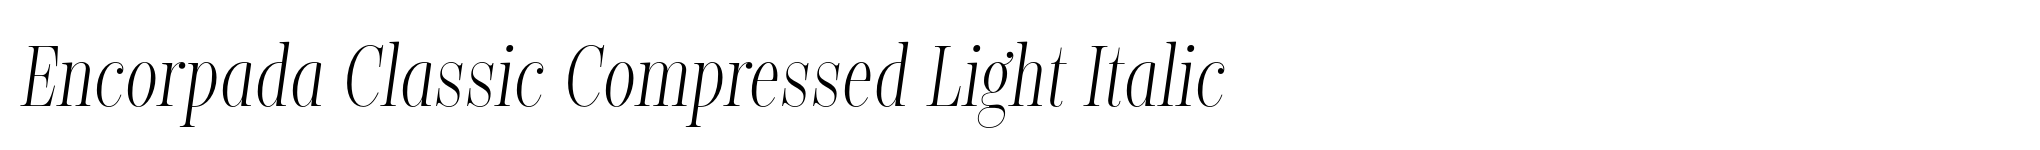 Encorpada Classic Compressed Light Italic image